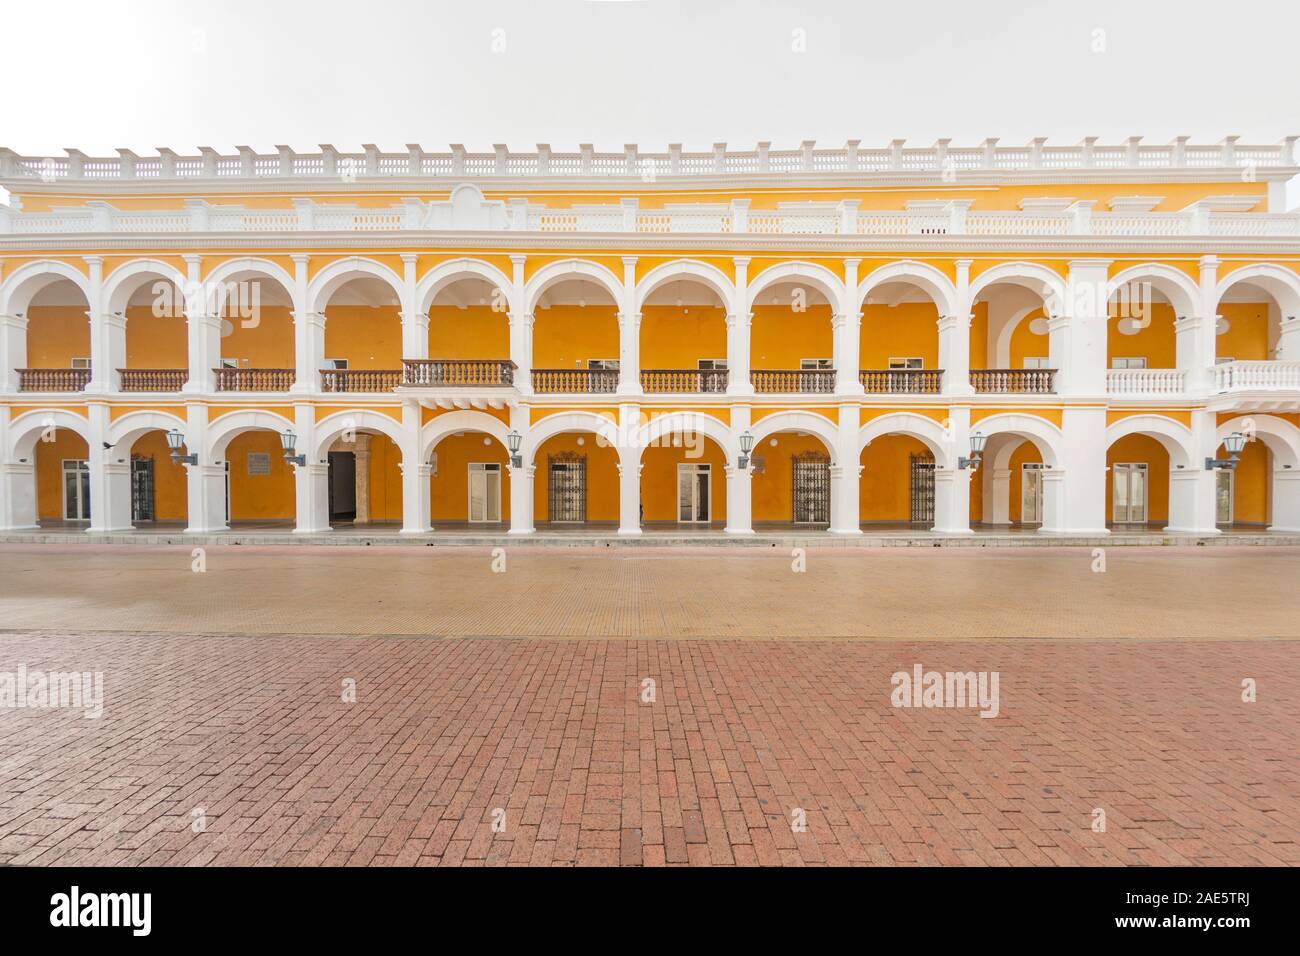 The restored Palace of the Proclamation (El Palacio de la Proclomacion) in the old city in Cartagena, Colombia. Stock Photo